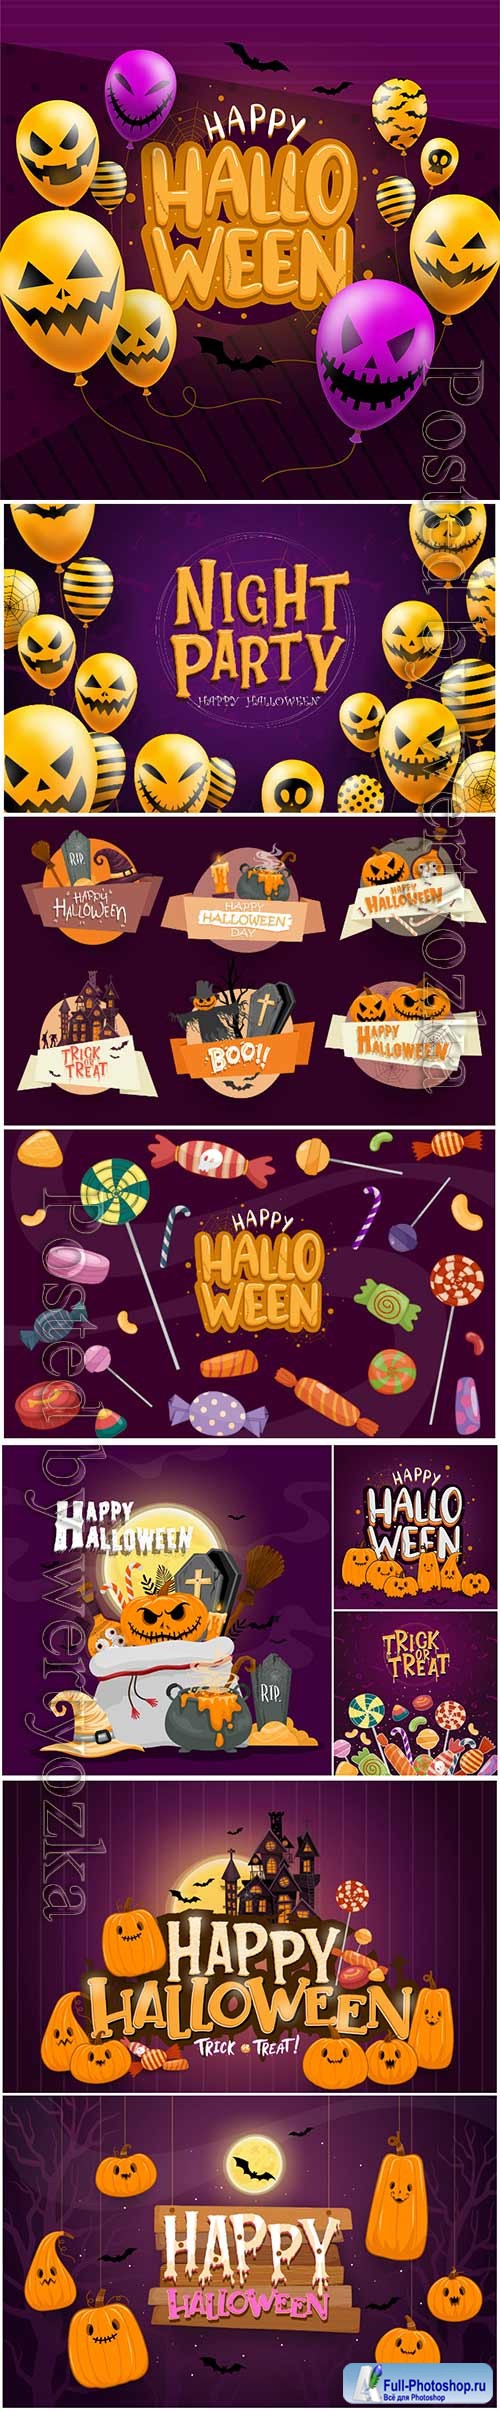 Happy halloween background template